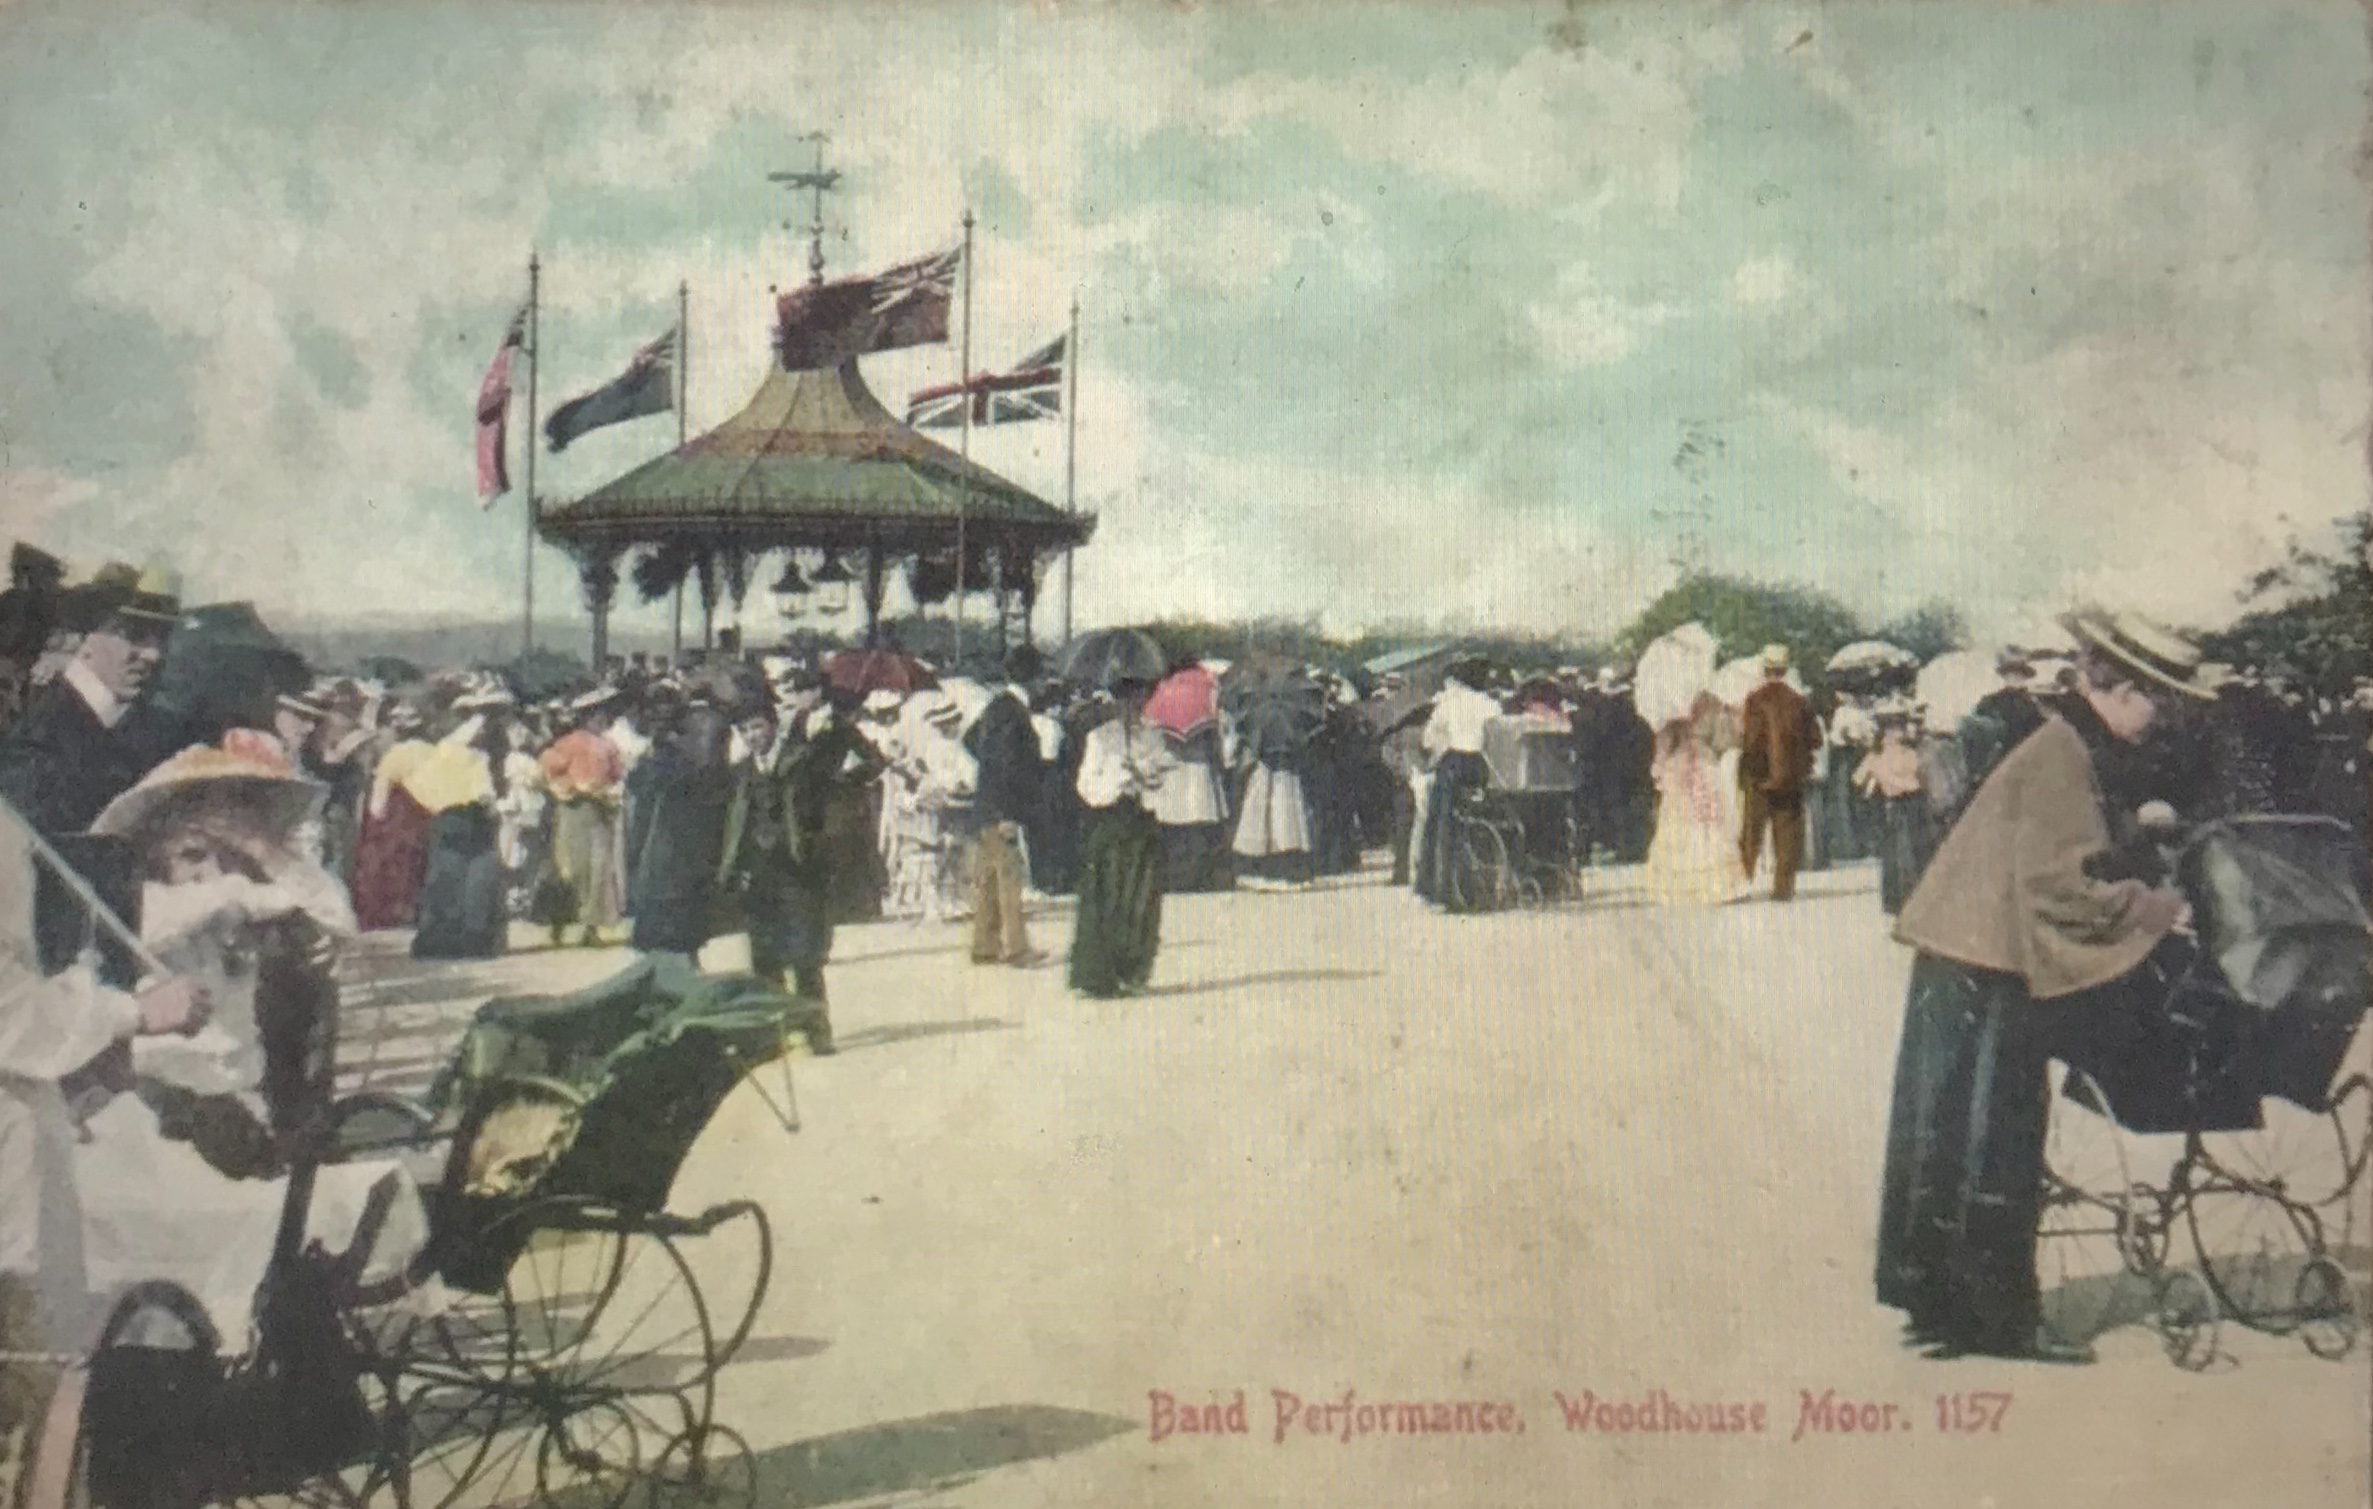 Band Performance, Woodhouse Moor, circa 1905